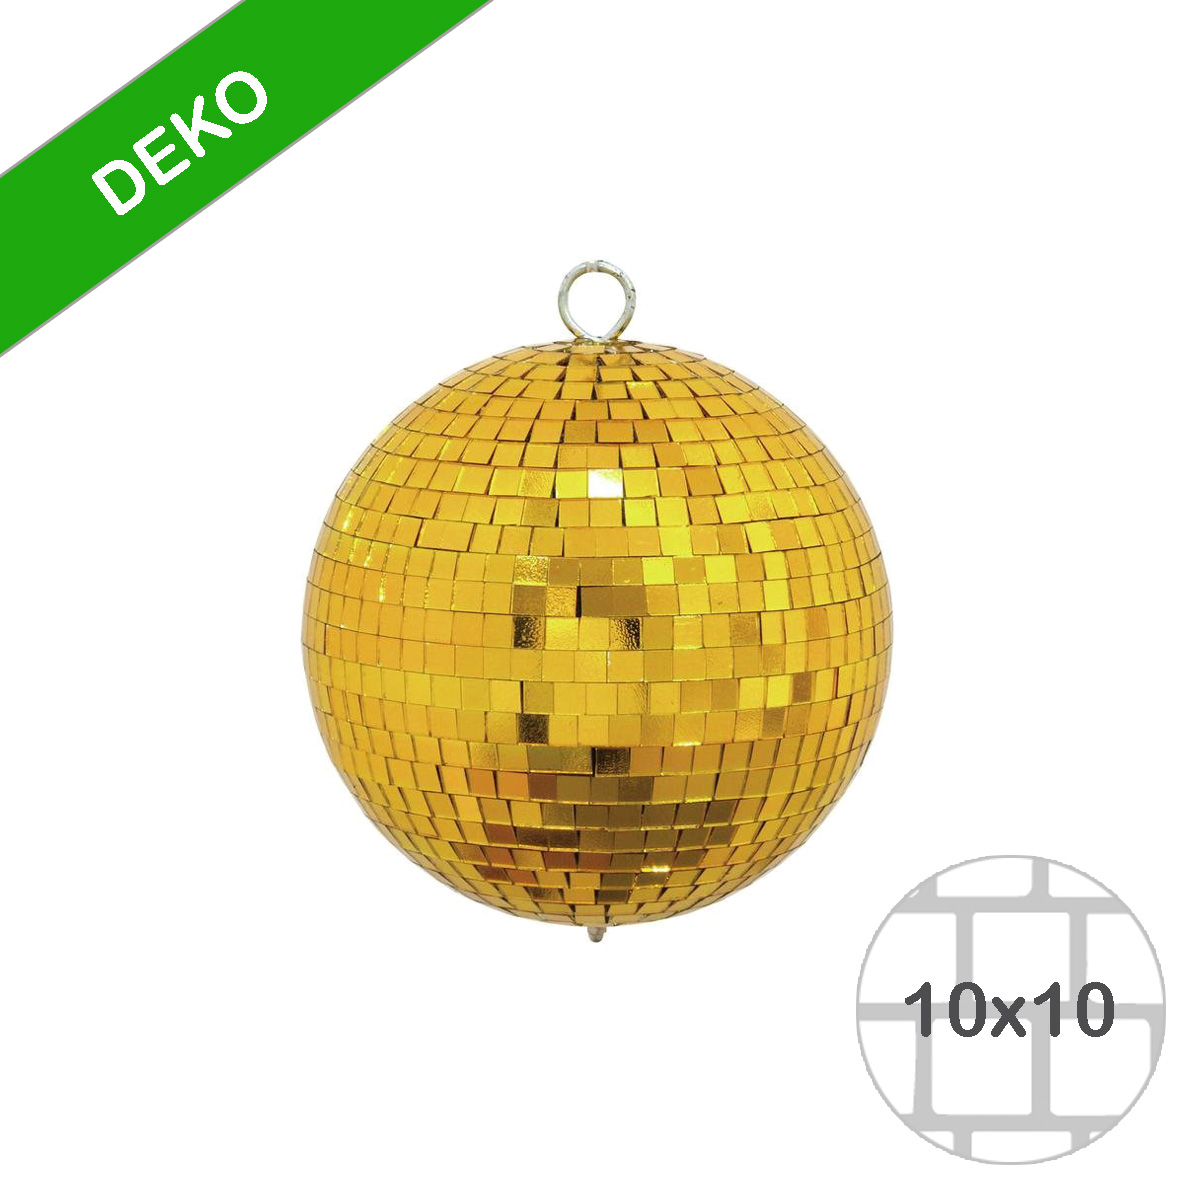 Spiegelkugel 15cm farbig gold- Diskokugel (Discokugel) zur Dekoration - Echtglas - mirrorball gold